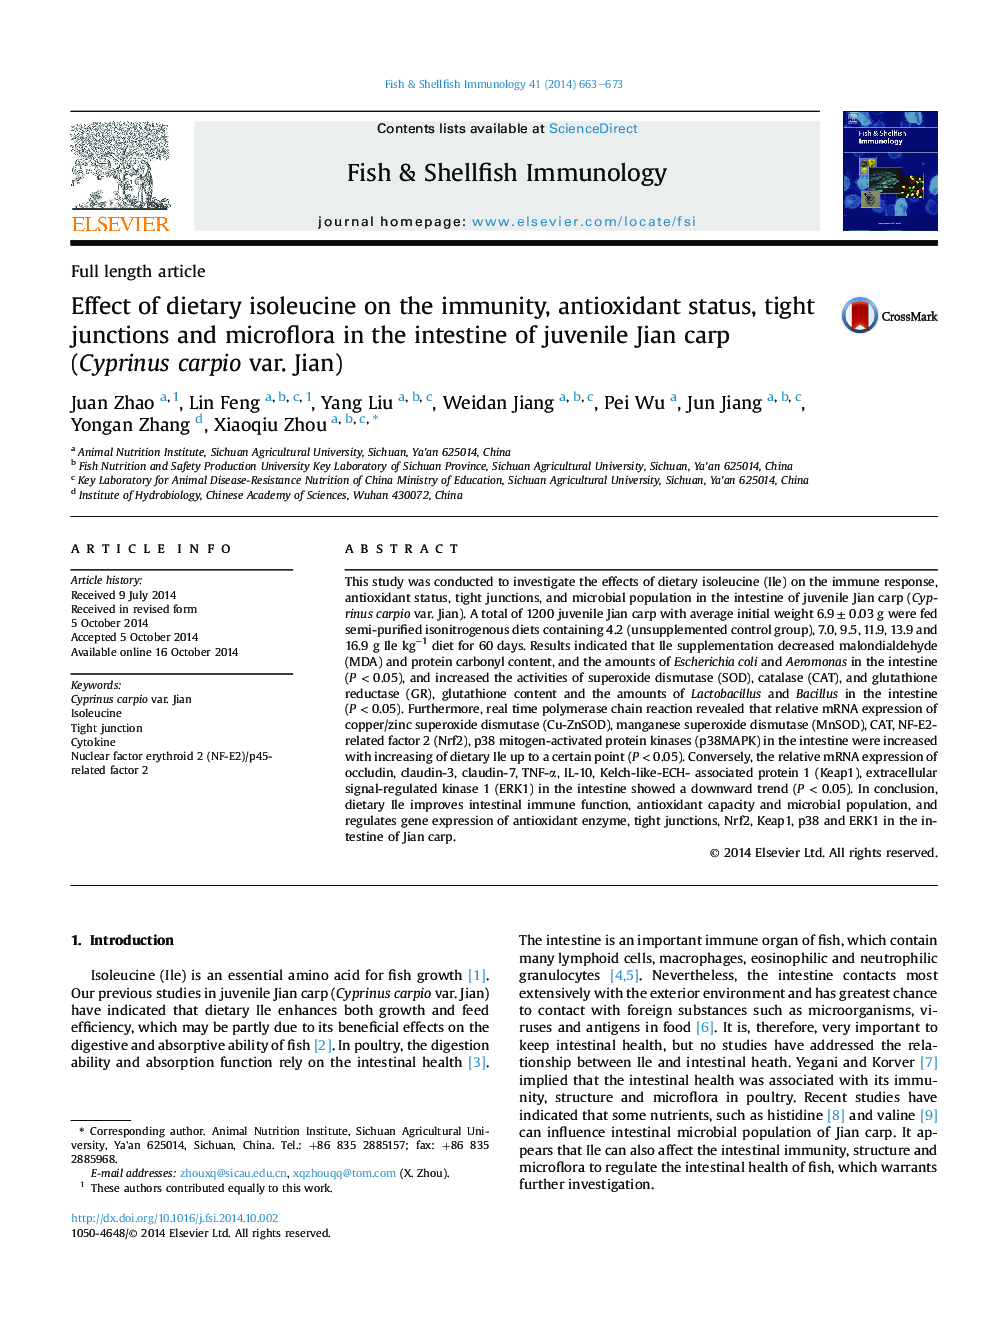 Effect of dietary isoleucine on the immunity, antioxidant status, tight junctions and microflora in the intestine of juvenile Jian carp (Cyprinus carpio var. Jian)